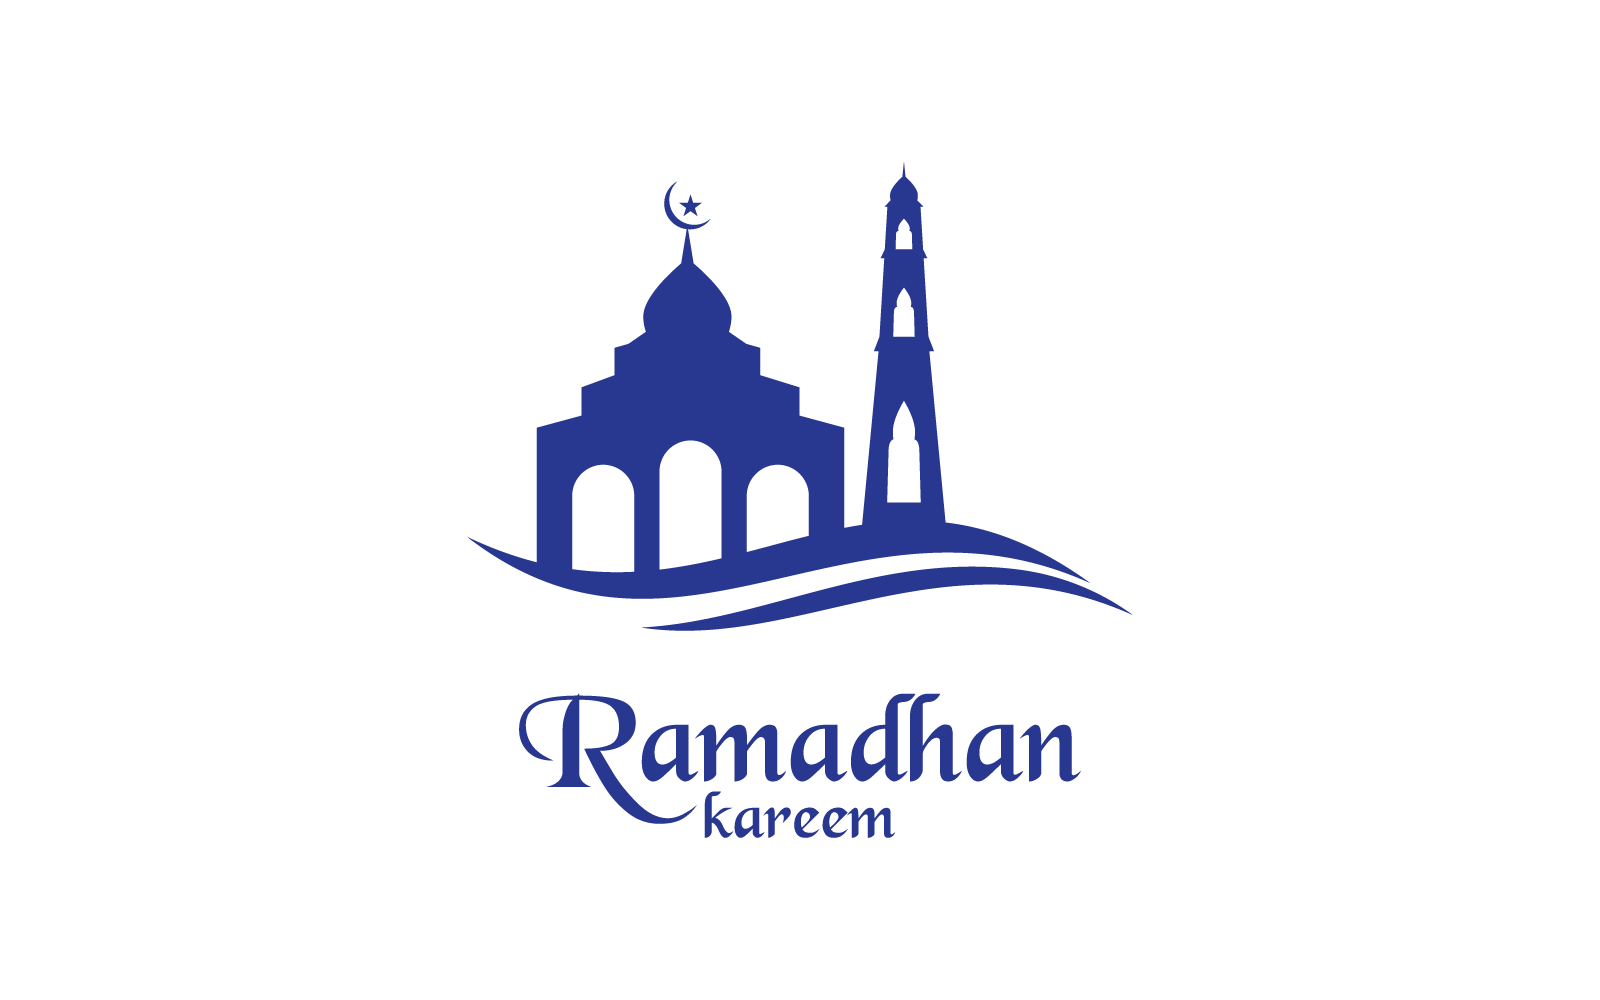 Islamic, Mosque,ramadhan kareem logo vector Logo Template